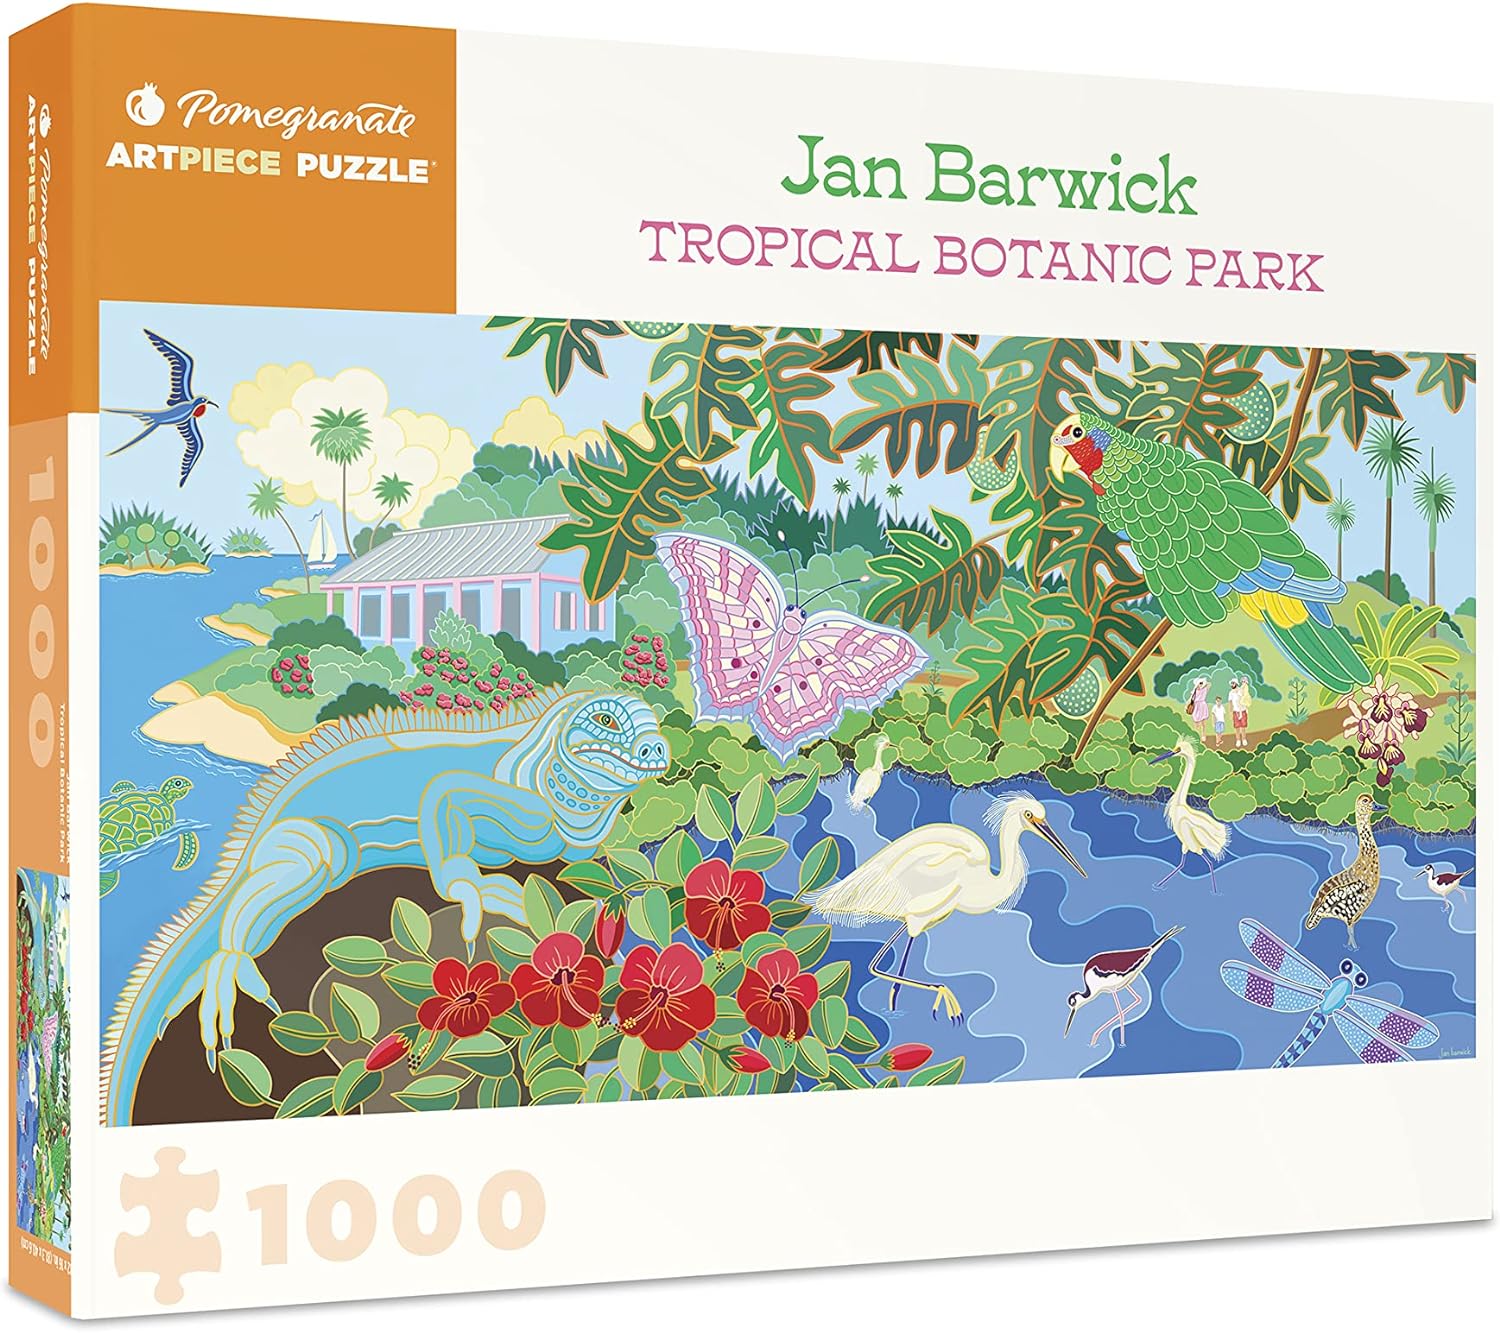 Tropical Botanic Park